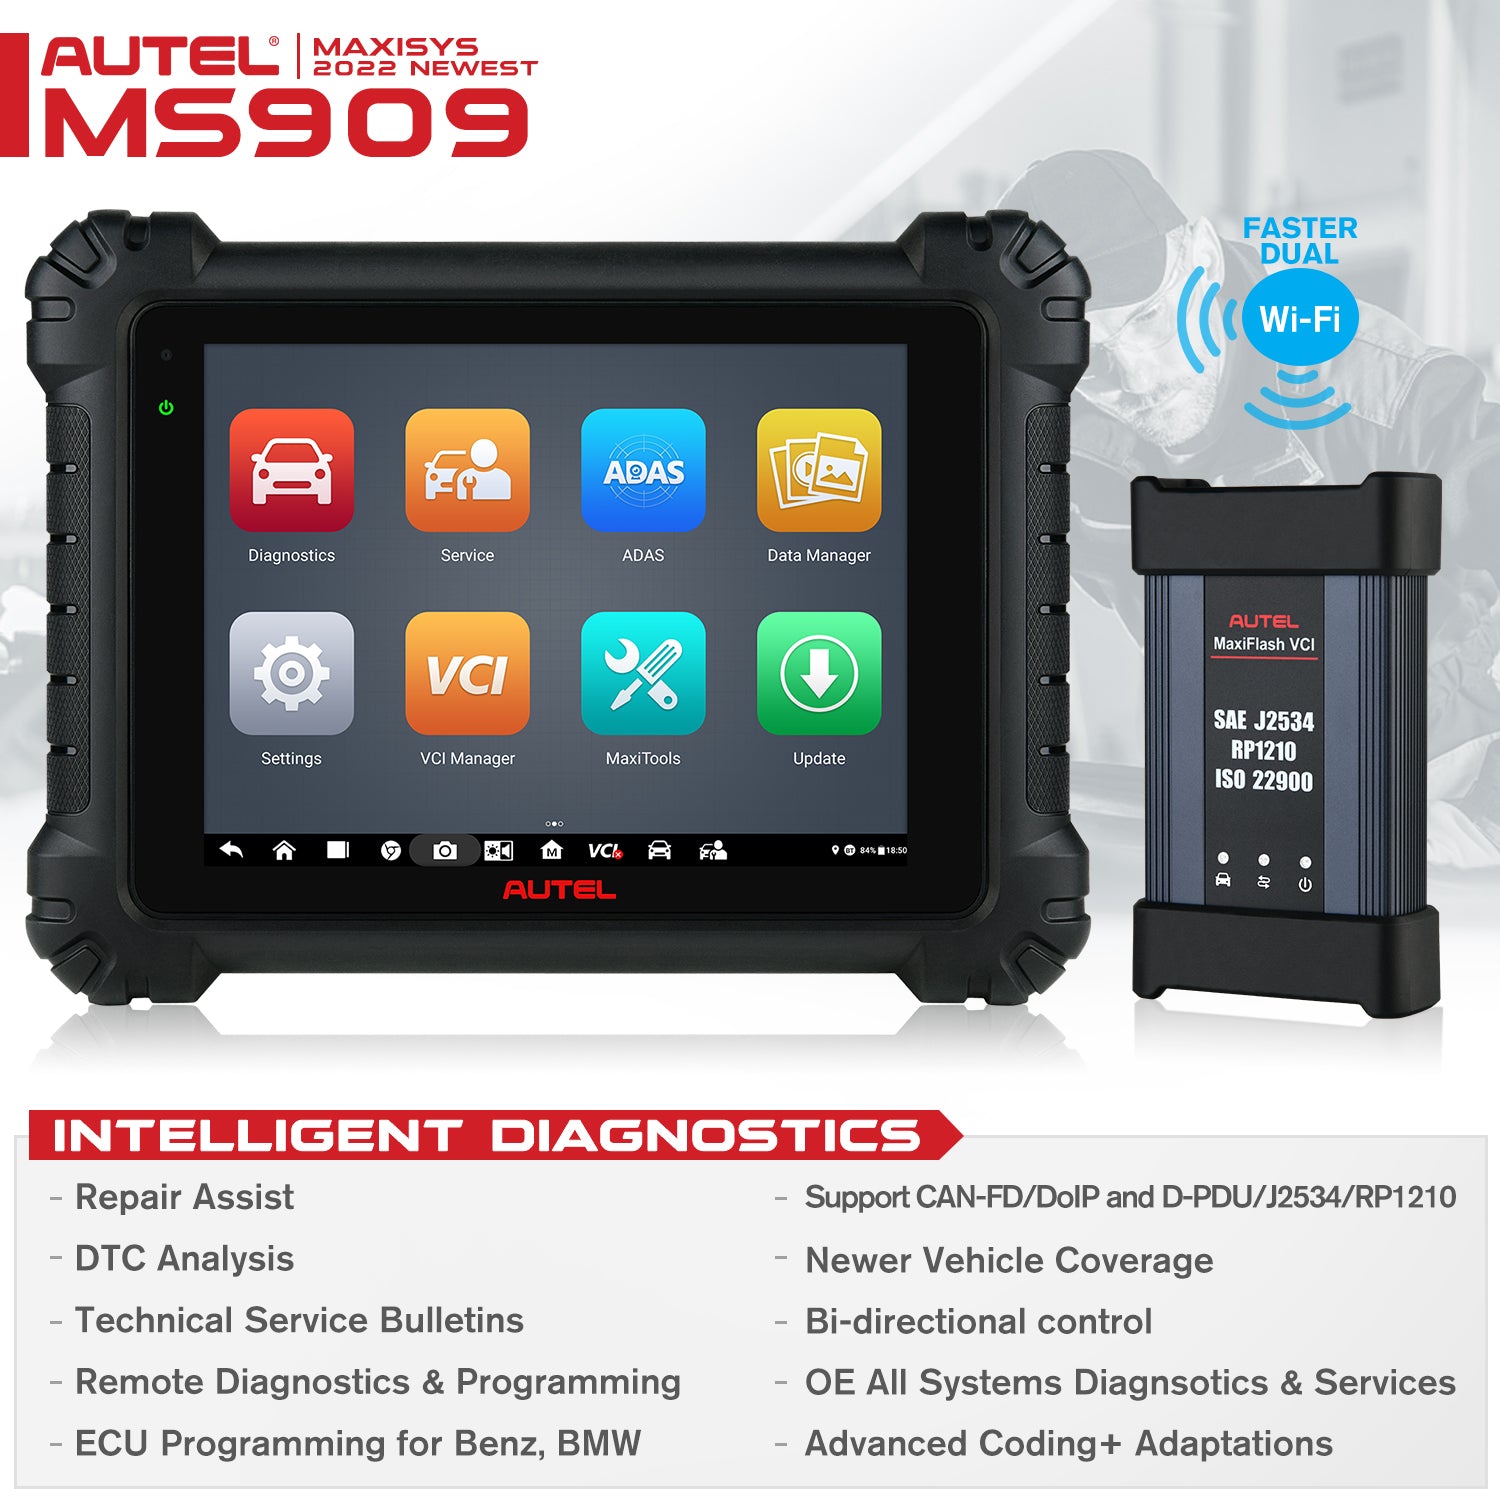 Autel MS909 Scanner MaxiSYS MS909 Autel Car Diagnostic Tool Features Overview